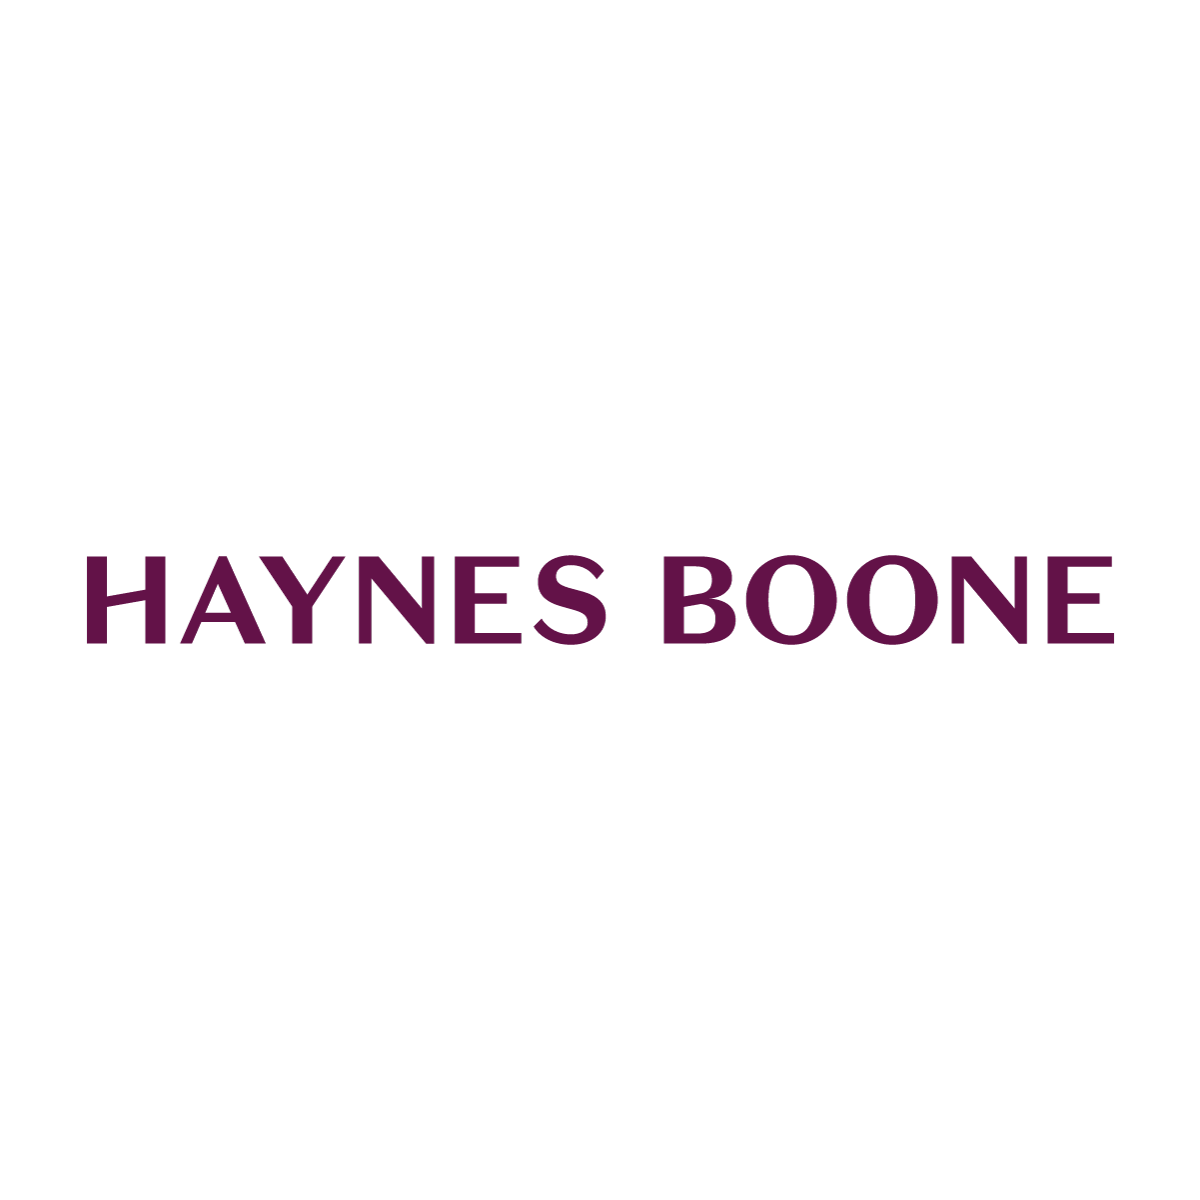 Haynes Boone logo